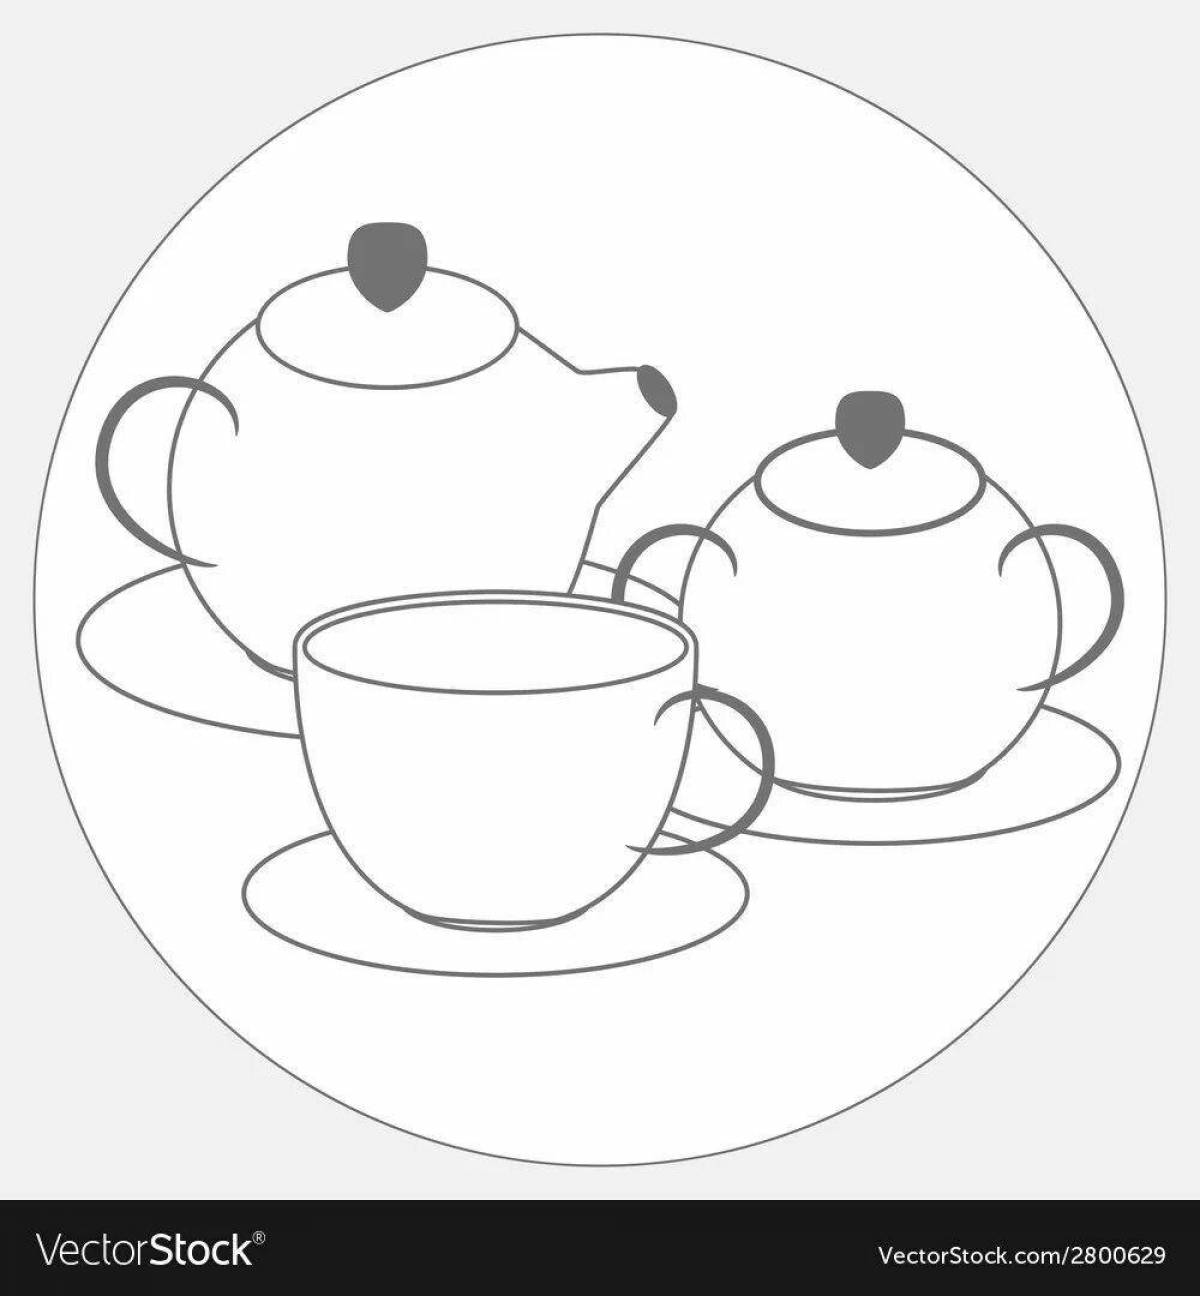 Delightful tea set coloring page